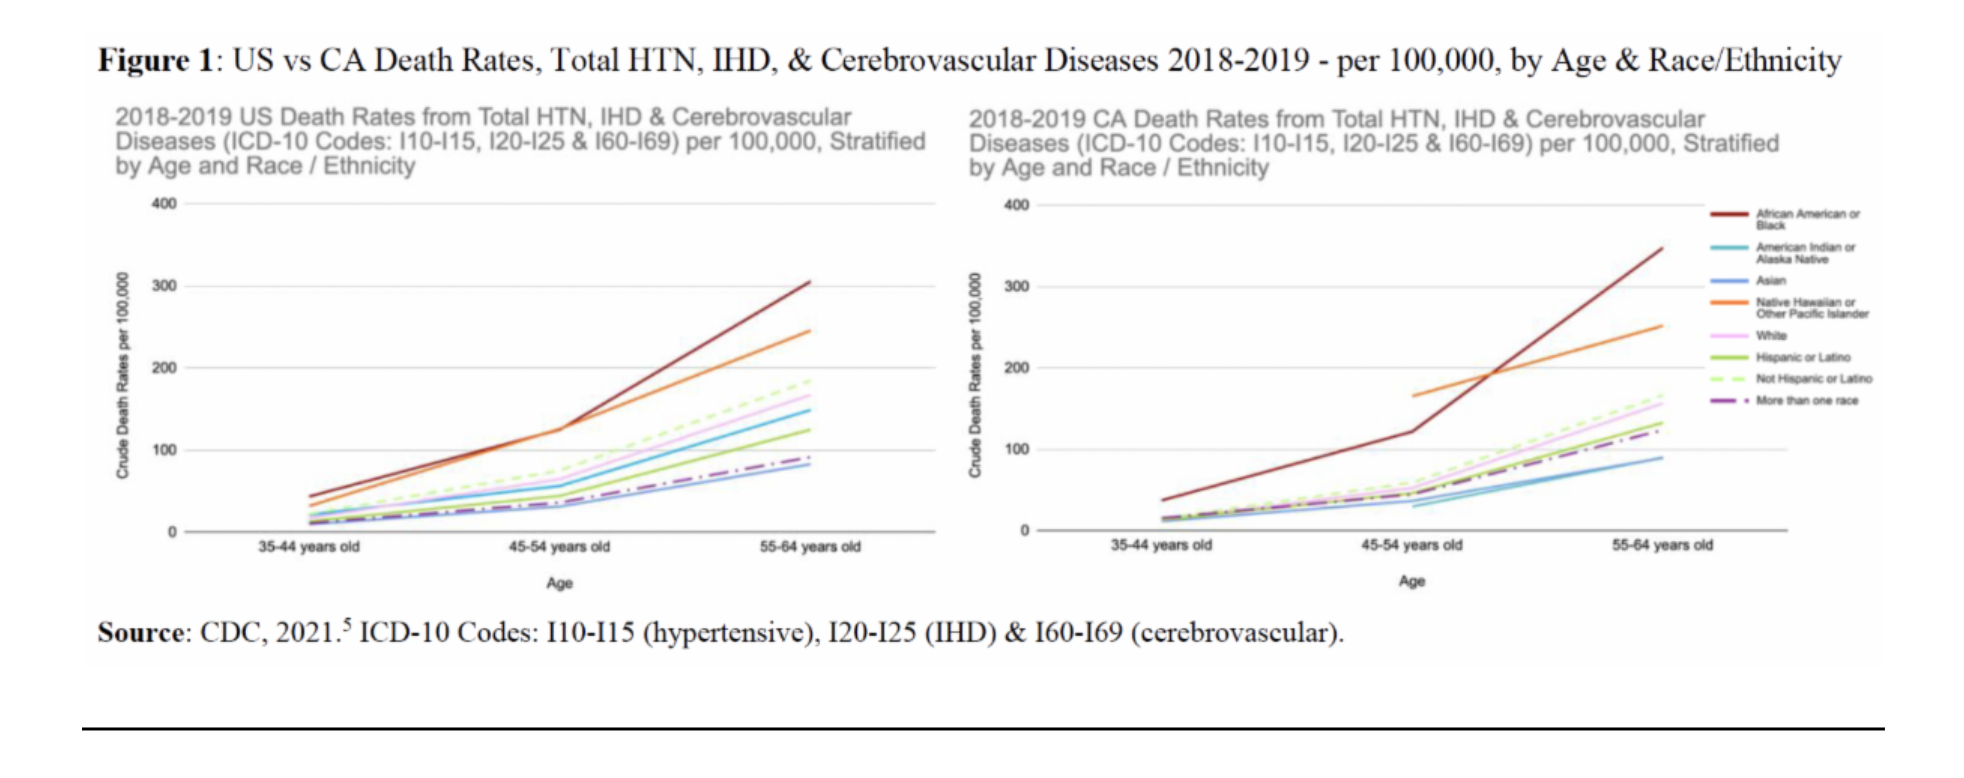  US vs CA death rates HTN, IHD, Cerebrovascular - 2018-1019